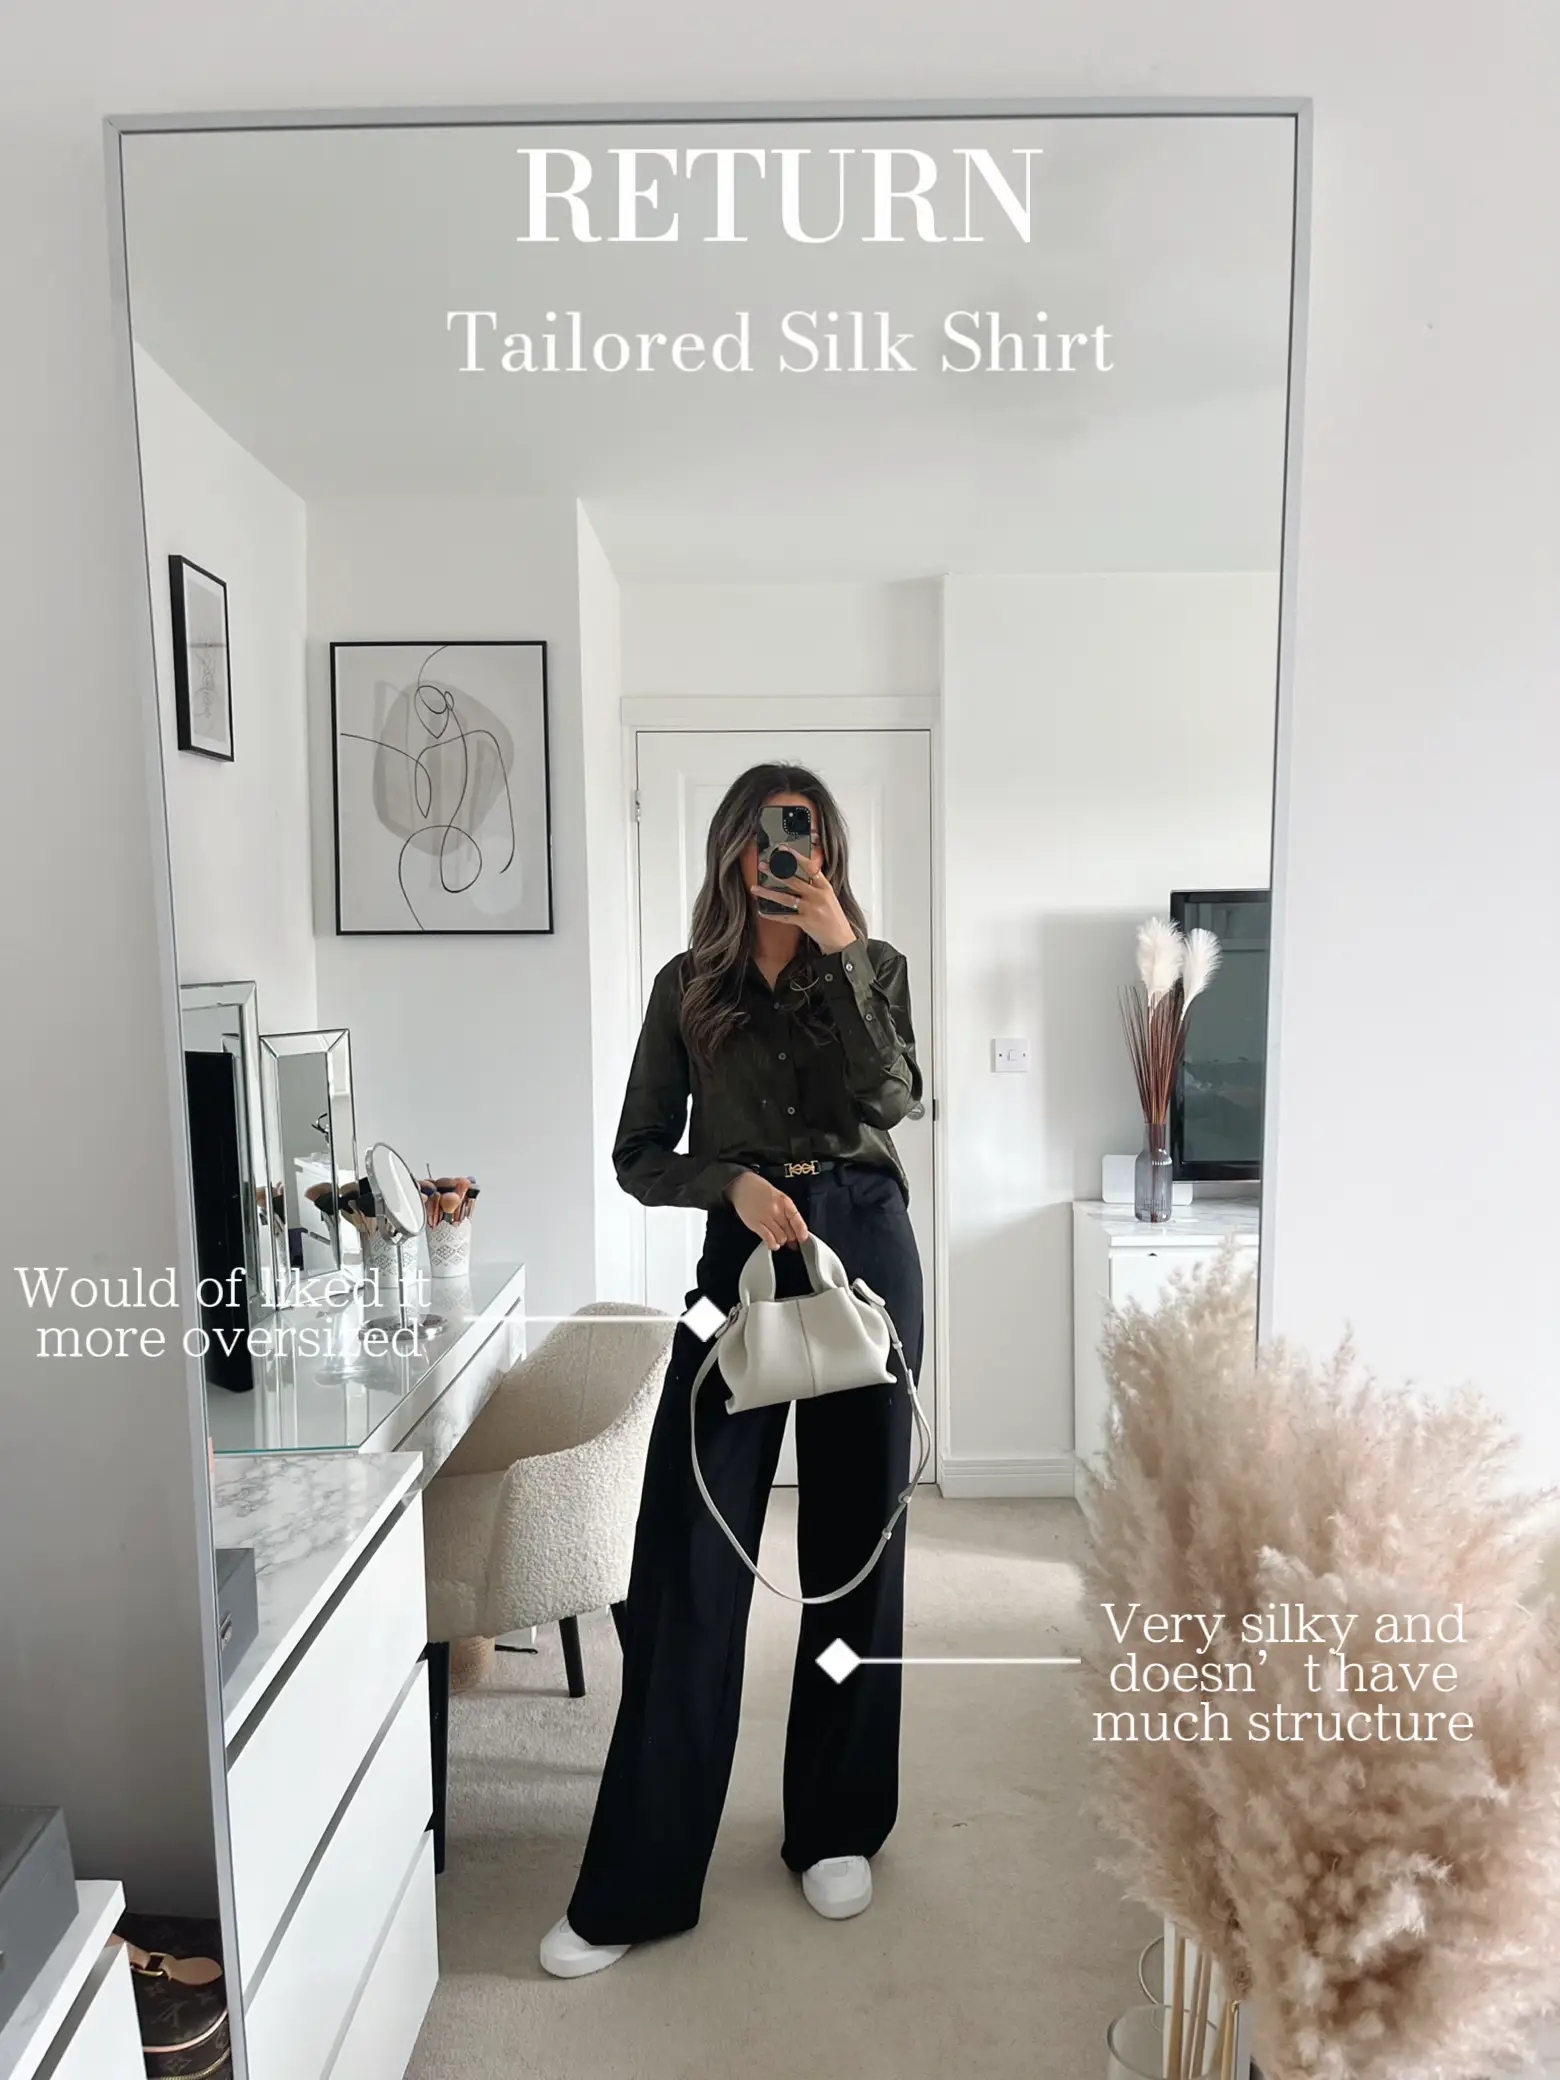 Tailored Silk Shirt